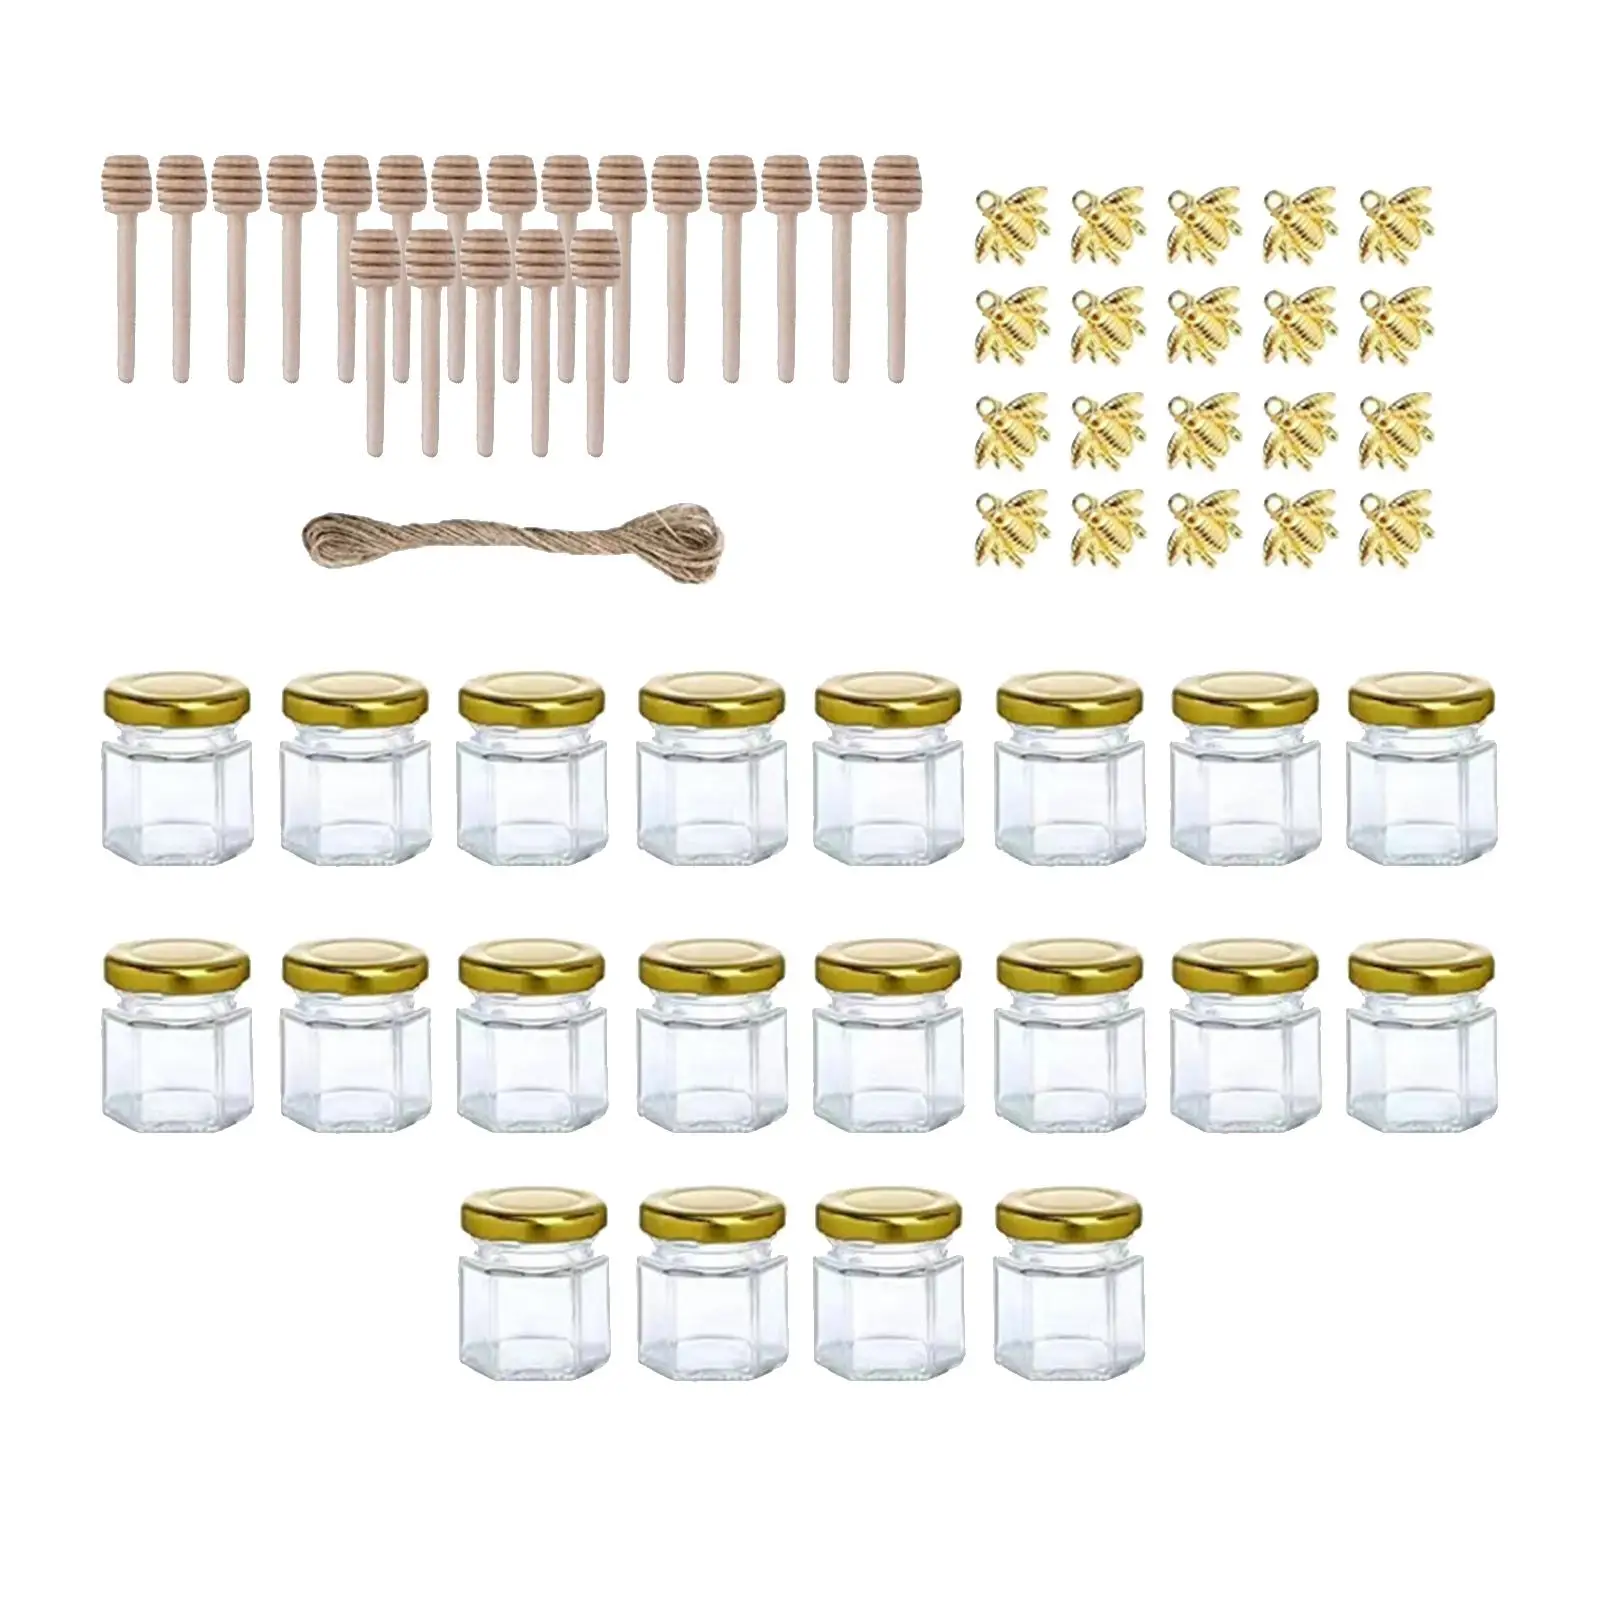 20Pcs Small Glass Jars Honey Jars 45ml for Canning, Storing, and Decorative Purpose Liquids Honey Wedding Candle Making